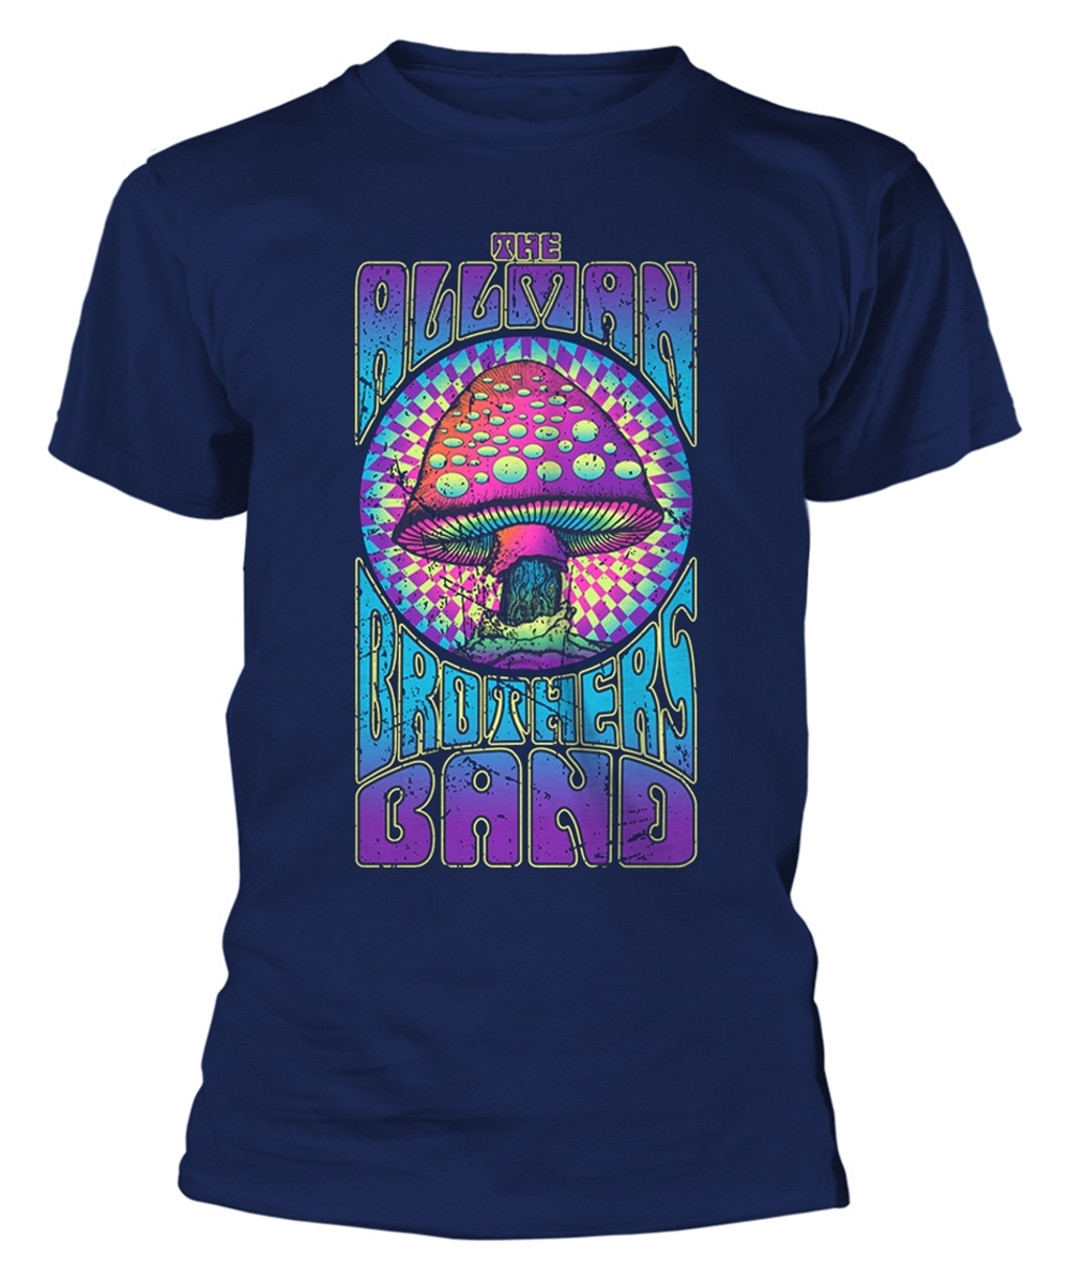 The Allman Brothers Band 'Mushroom' T-Shirt